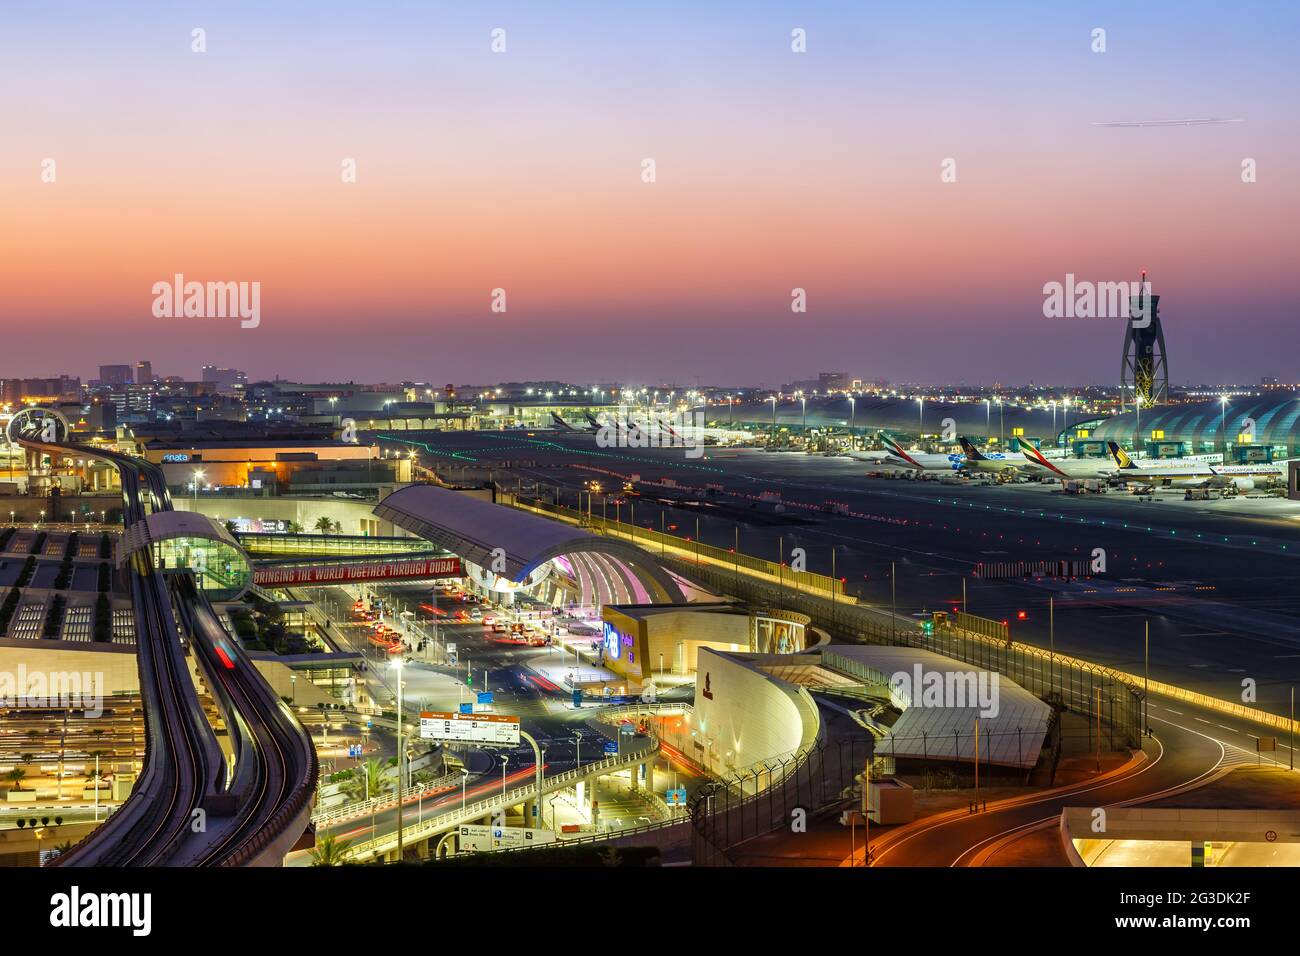 Dubai, United Arab Emirates - May 27, 2021: Overview of Dubai airport Terminal 3 (DXB) in the United Arab Emirates. Stock Photo